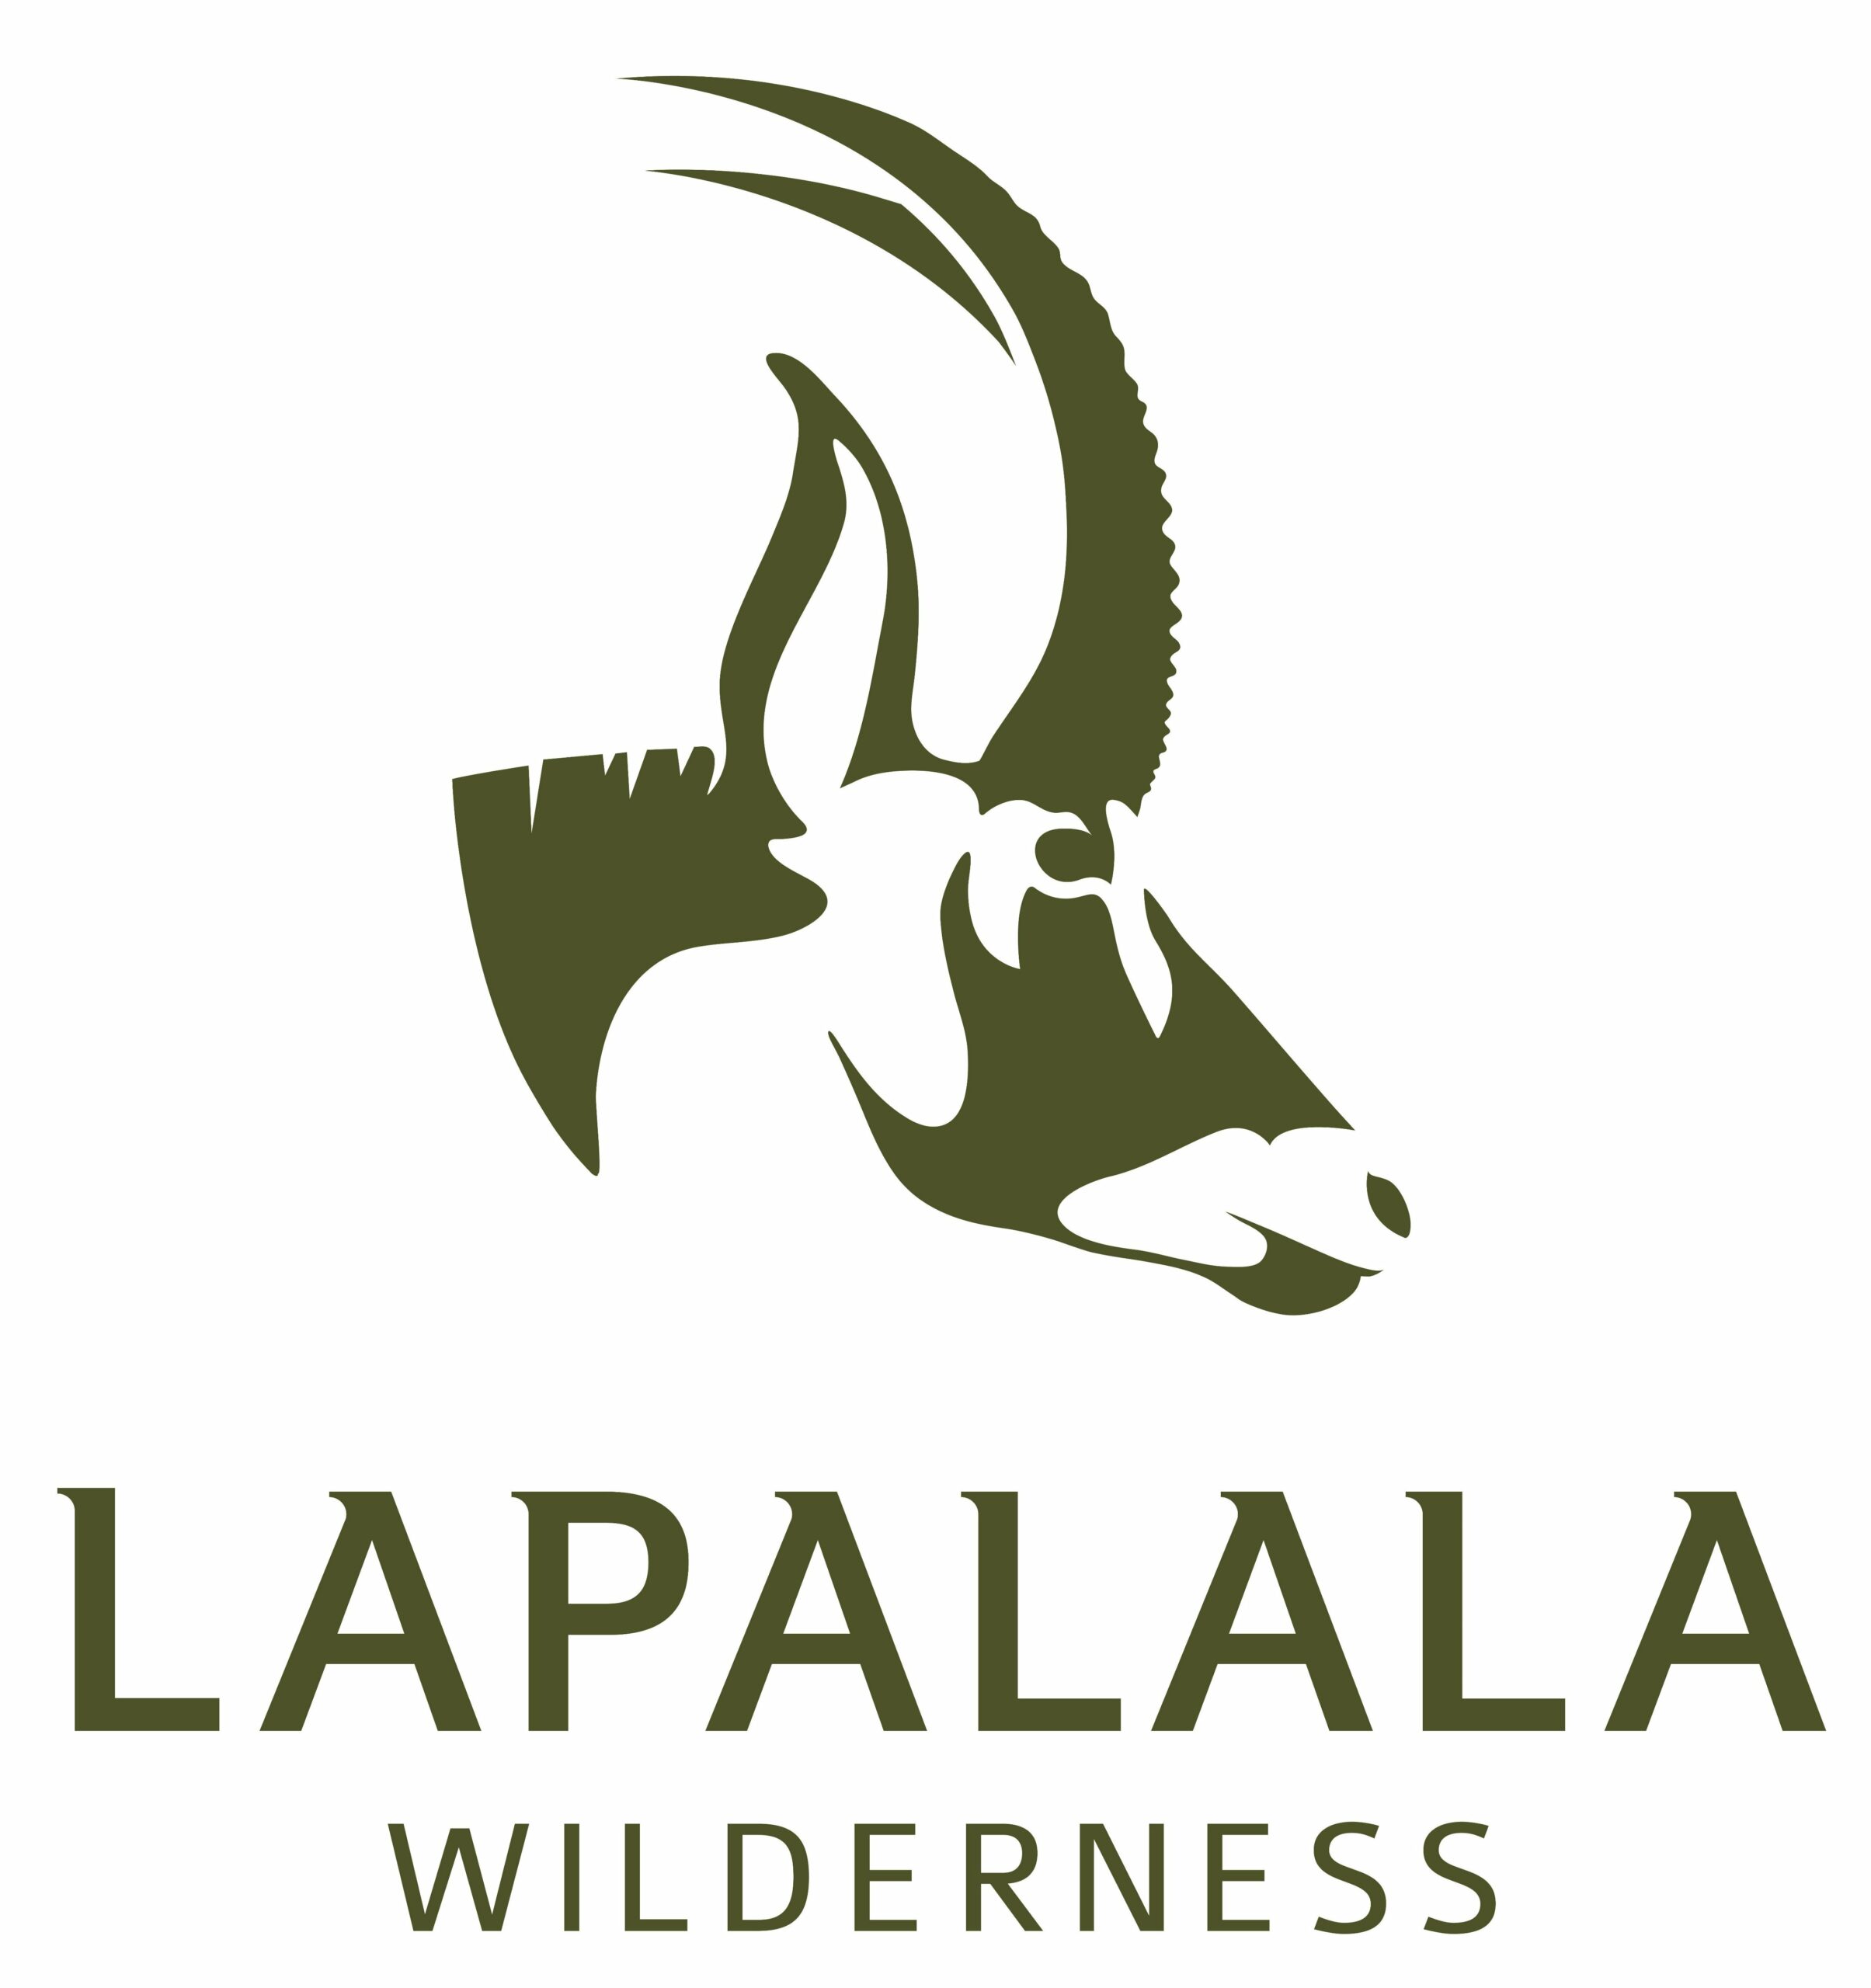 Lapalala Wilderness Foundation